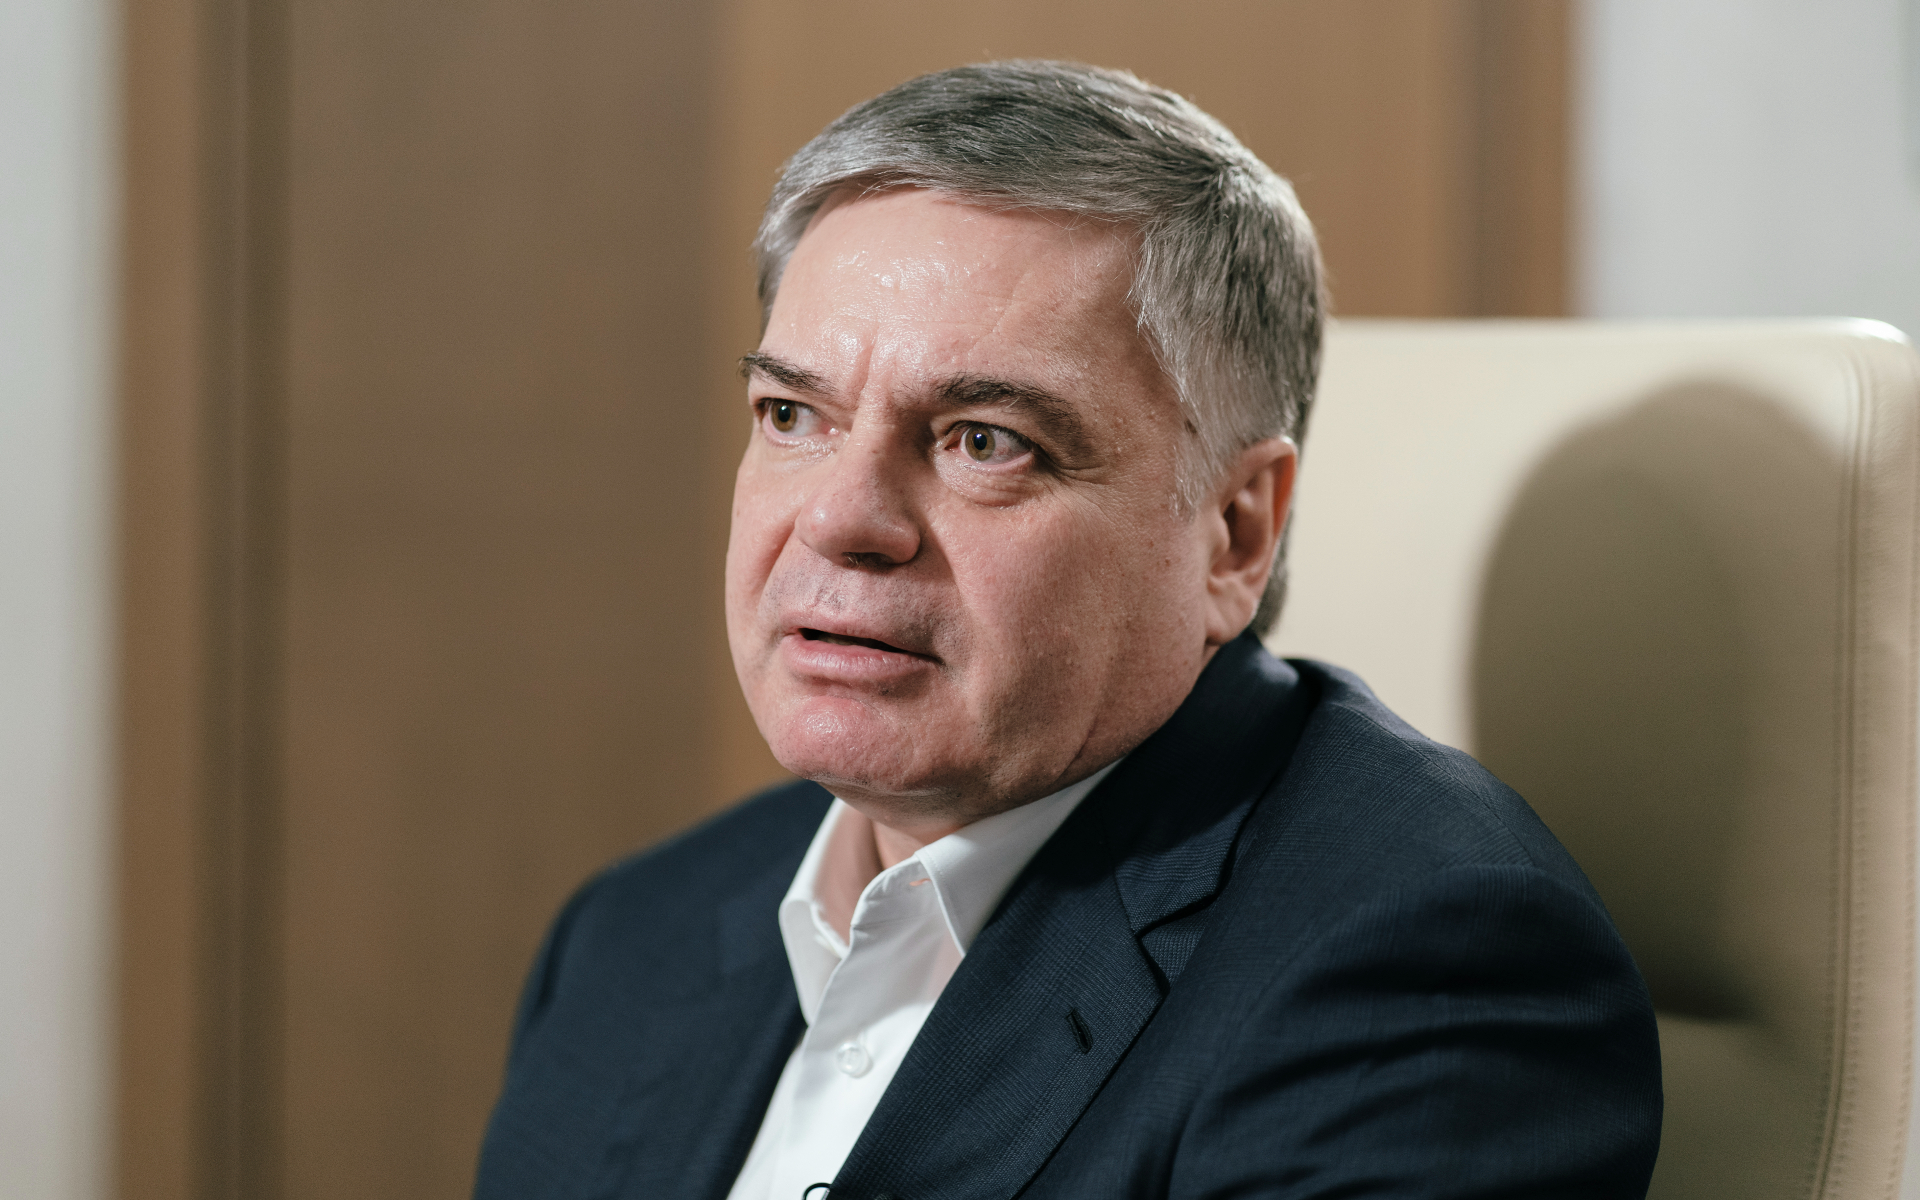 Сергей Шишкарев